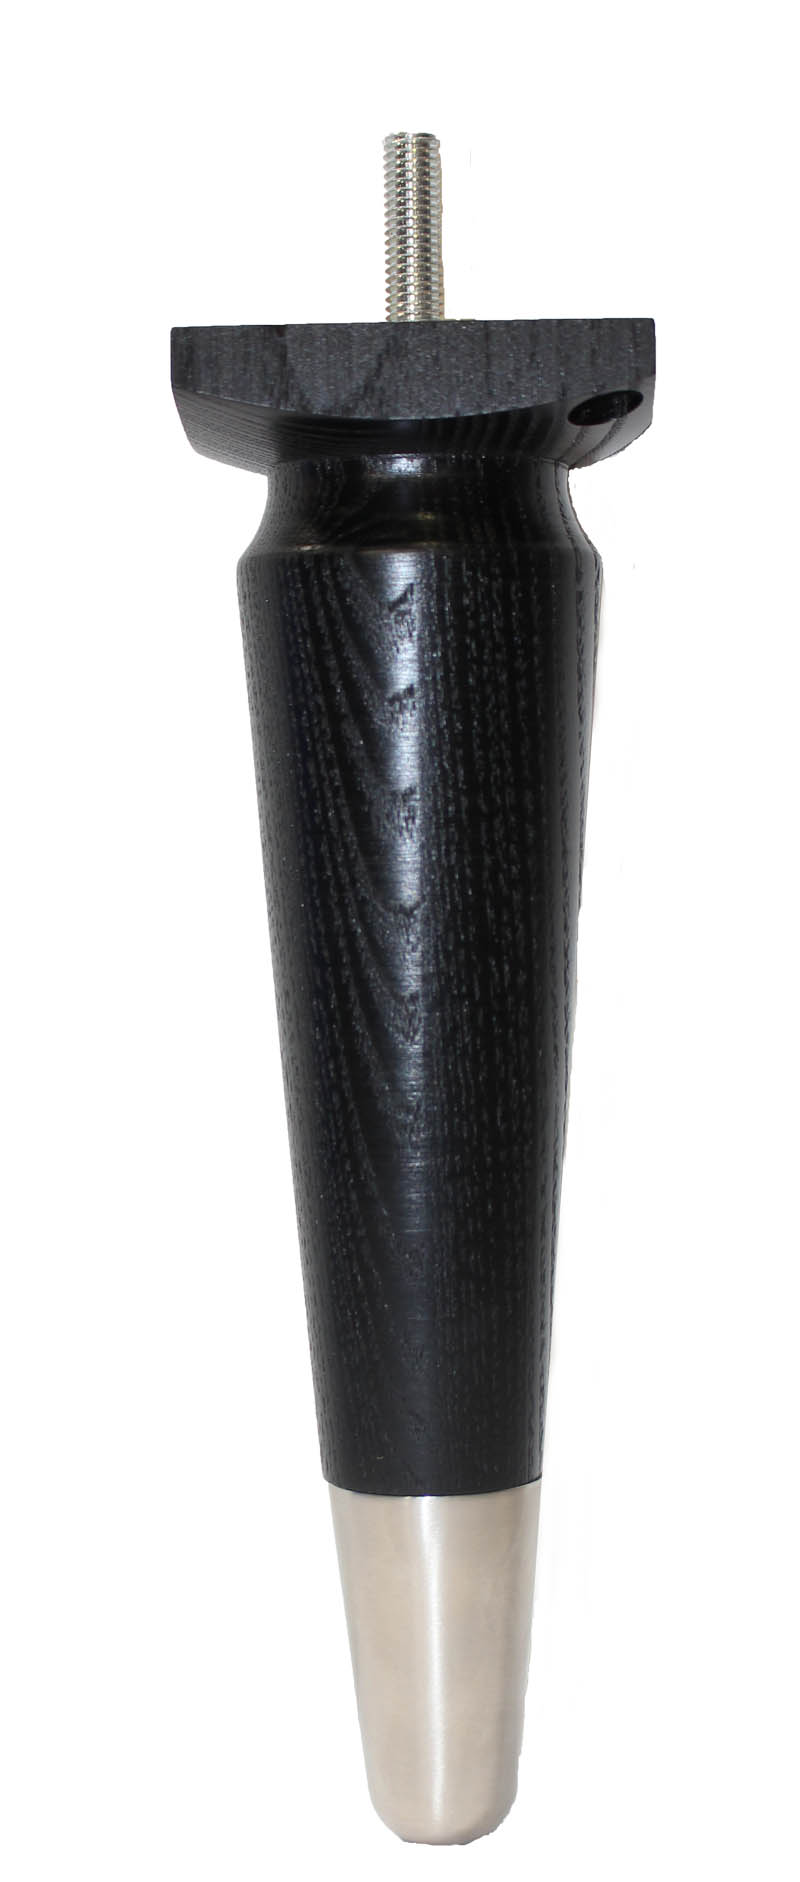 Tia Furniture Legs - Ash Black Finish - Brushed Chrome Slipper Cups - Set of 4